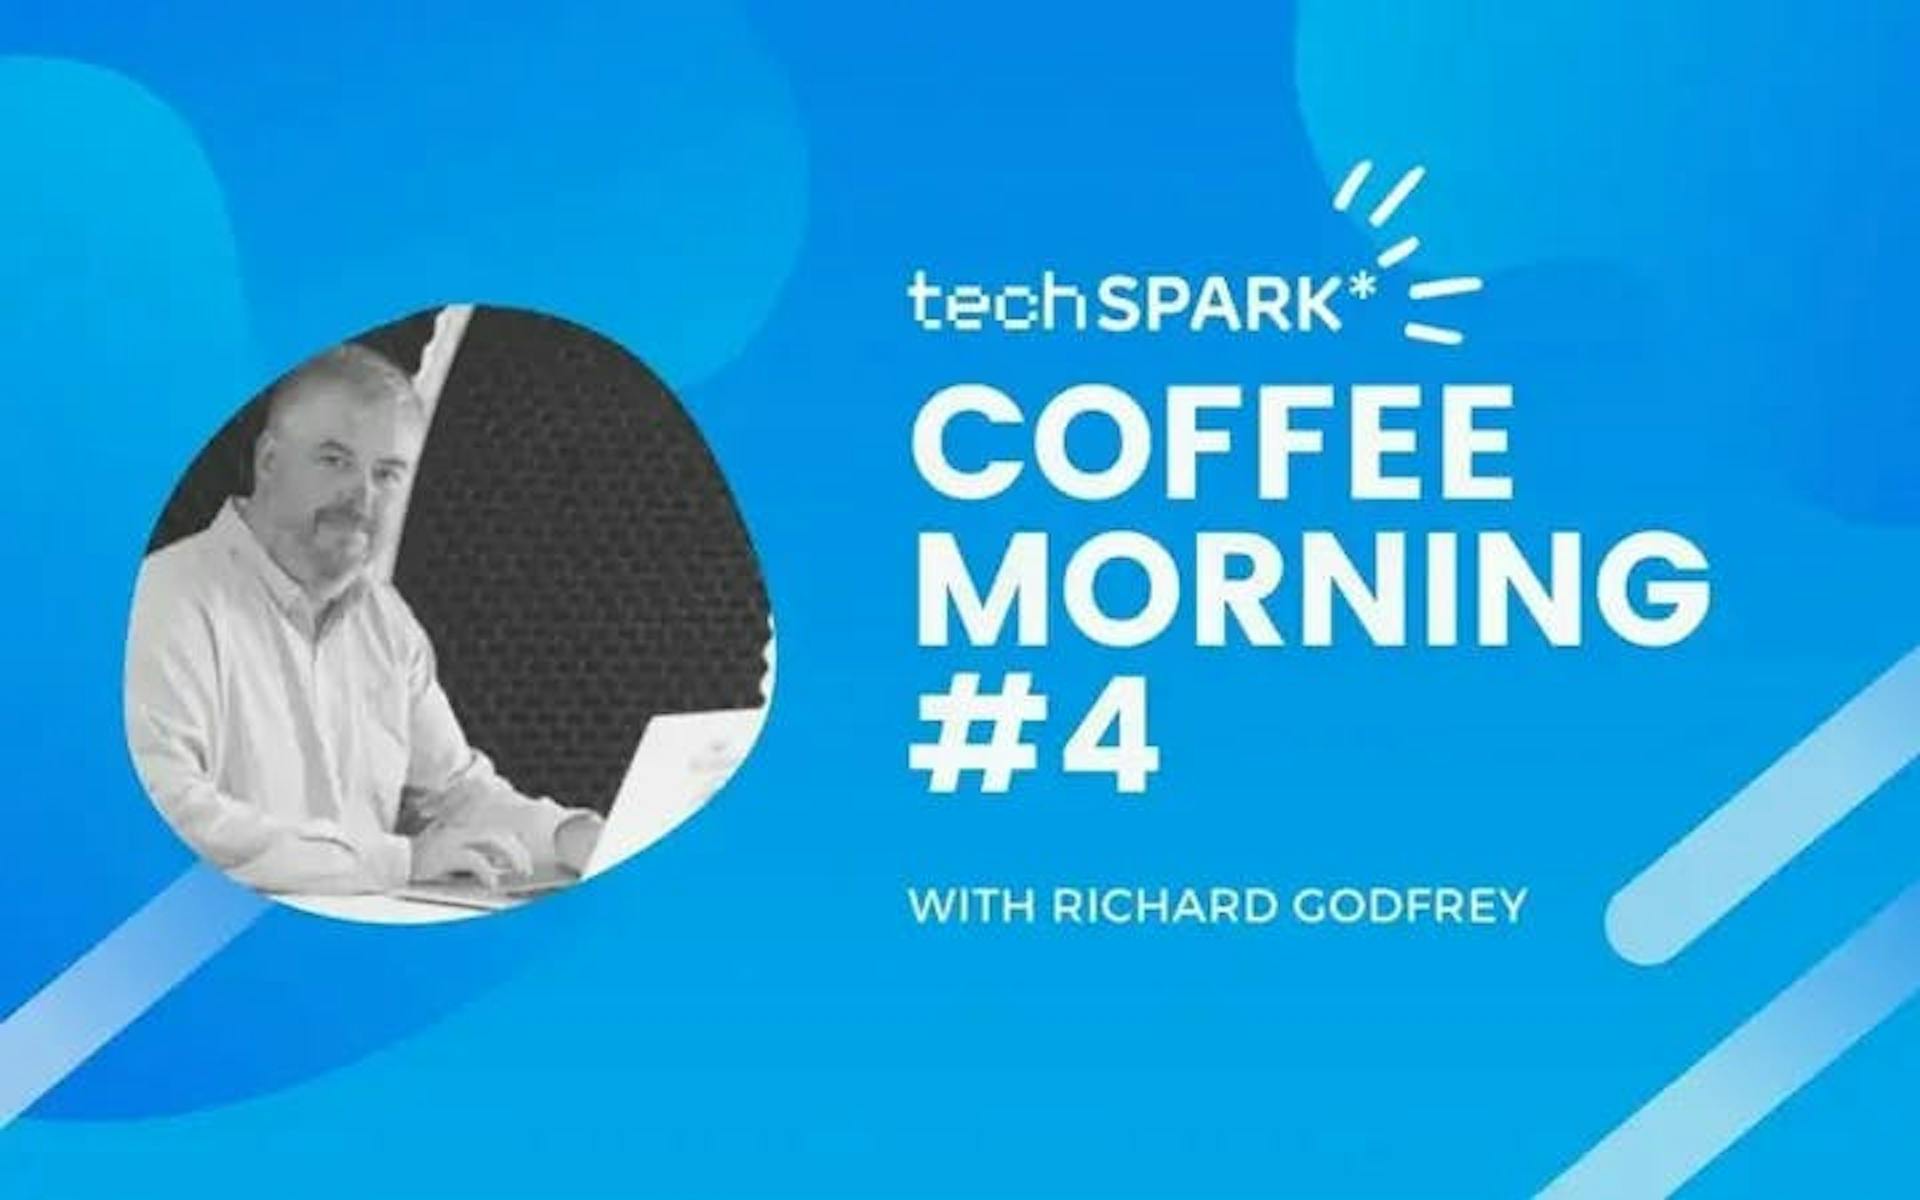 Coffee morning with Richard Godfrey